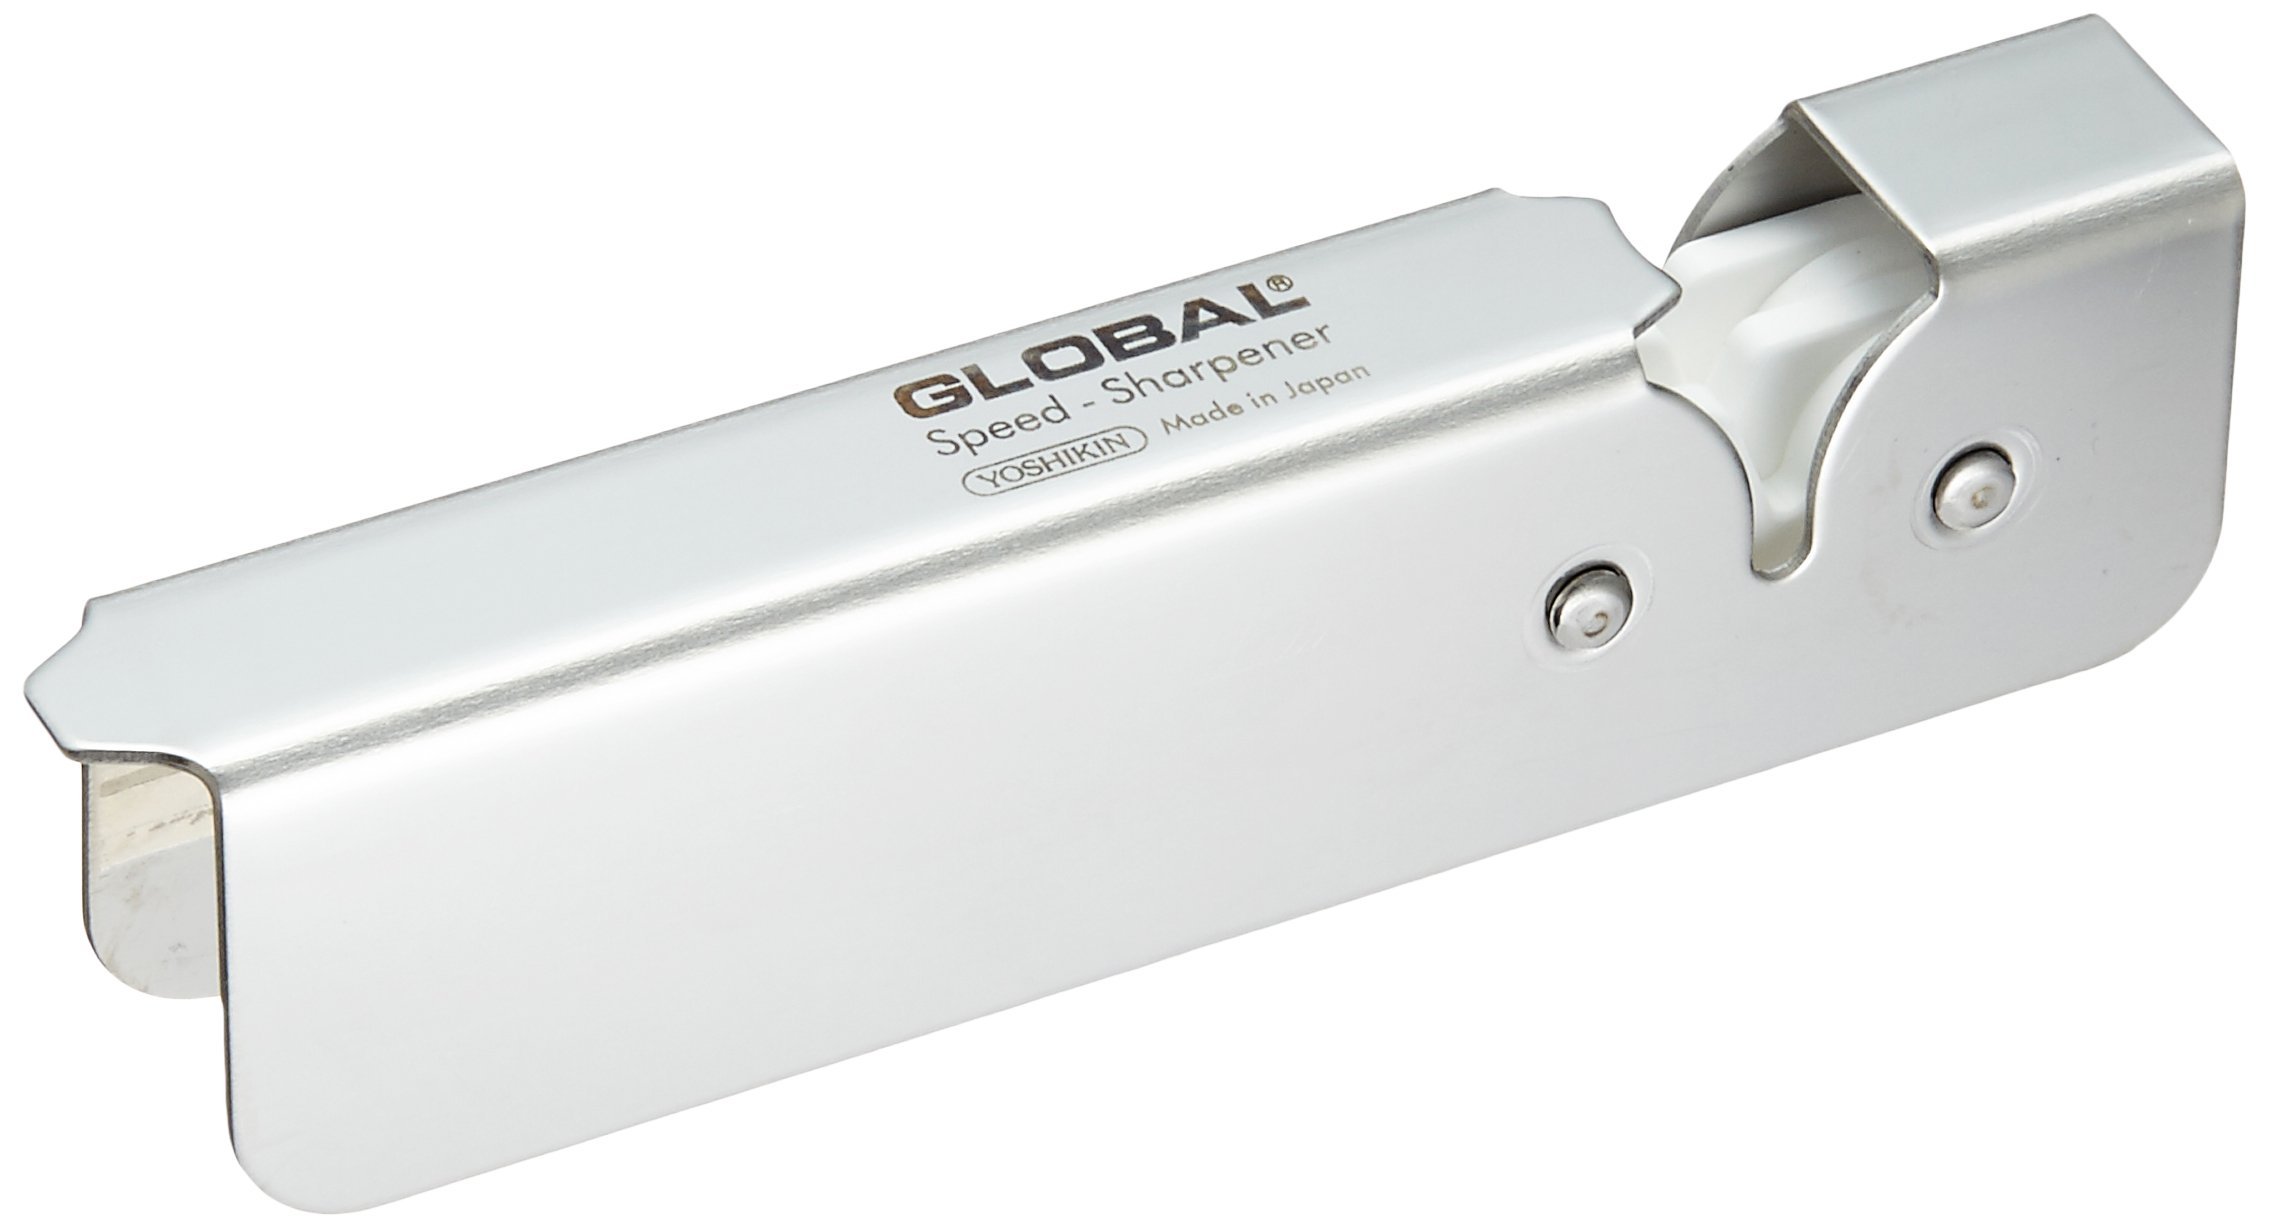 GLOBAL(グローバル) スピードシャープナー GSS-01